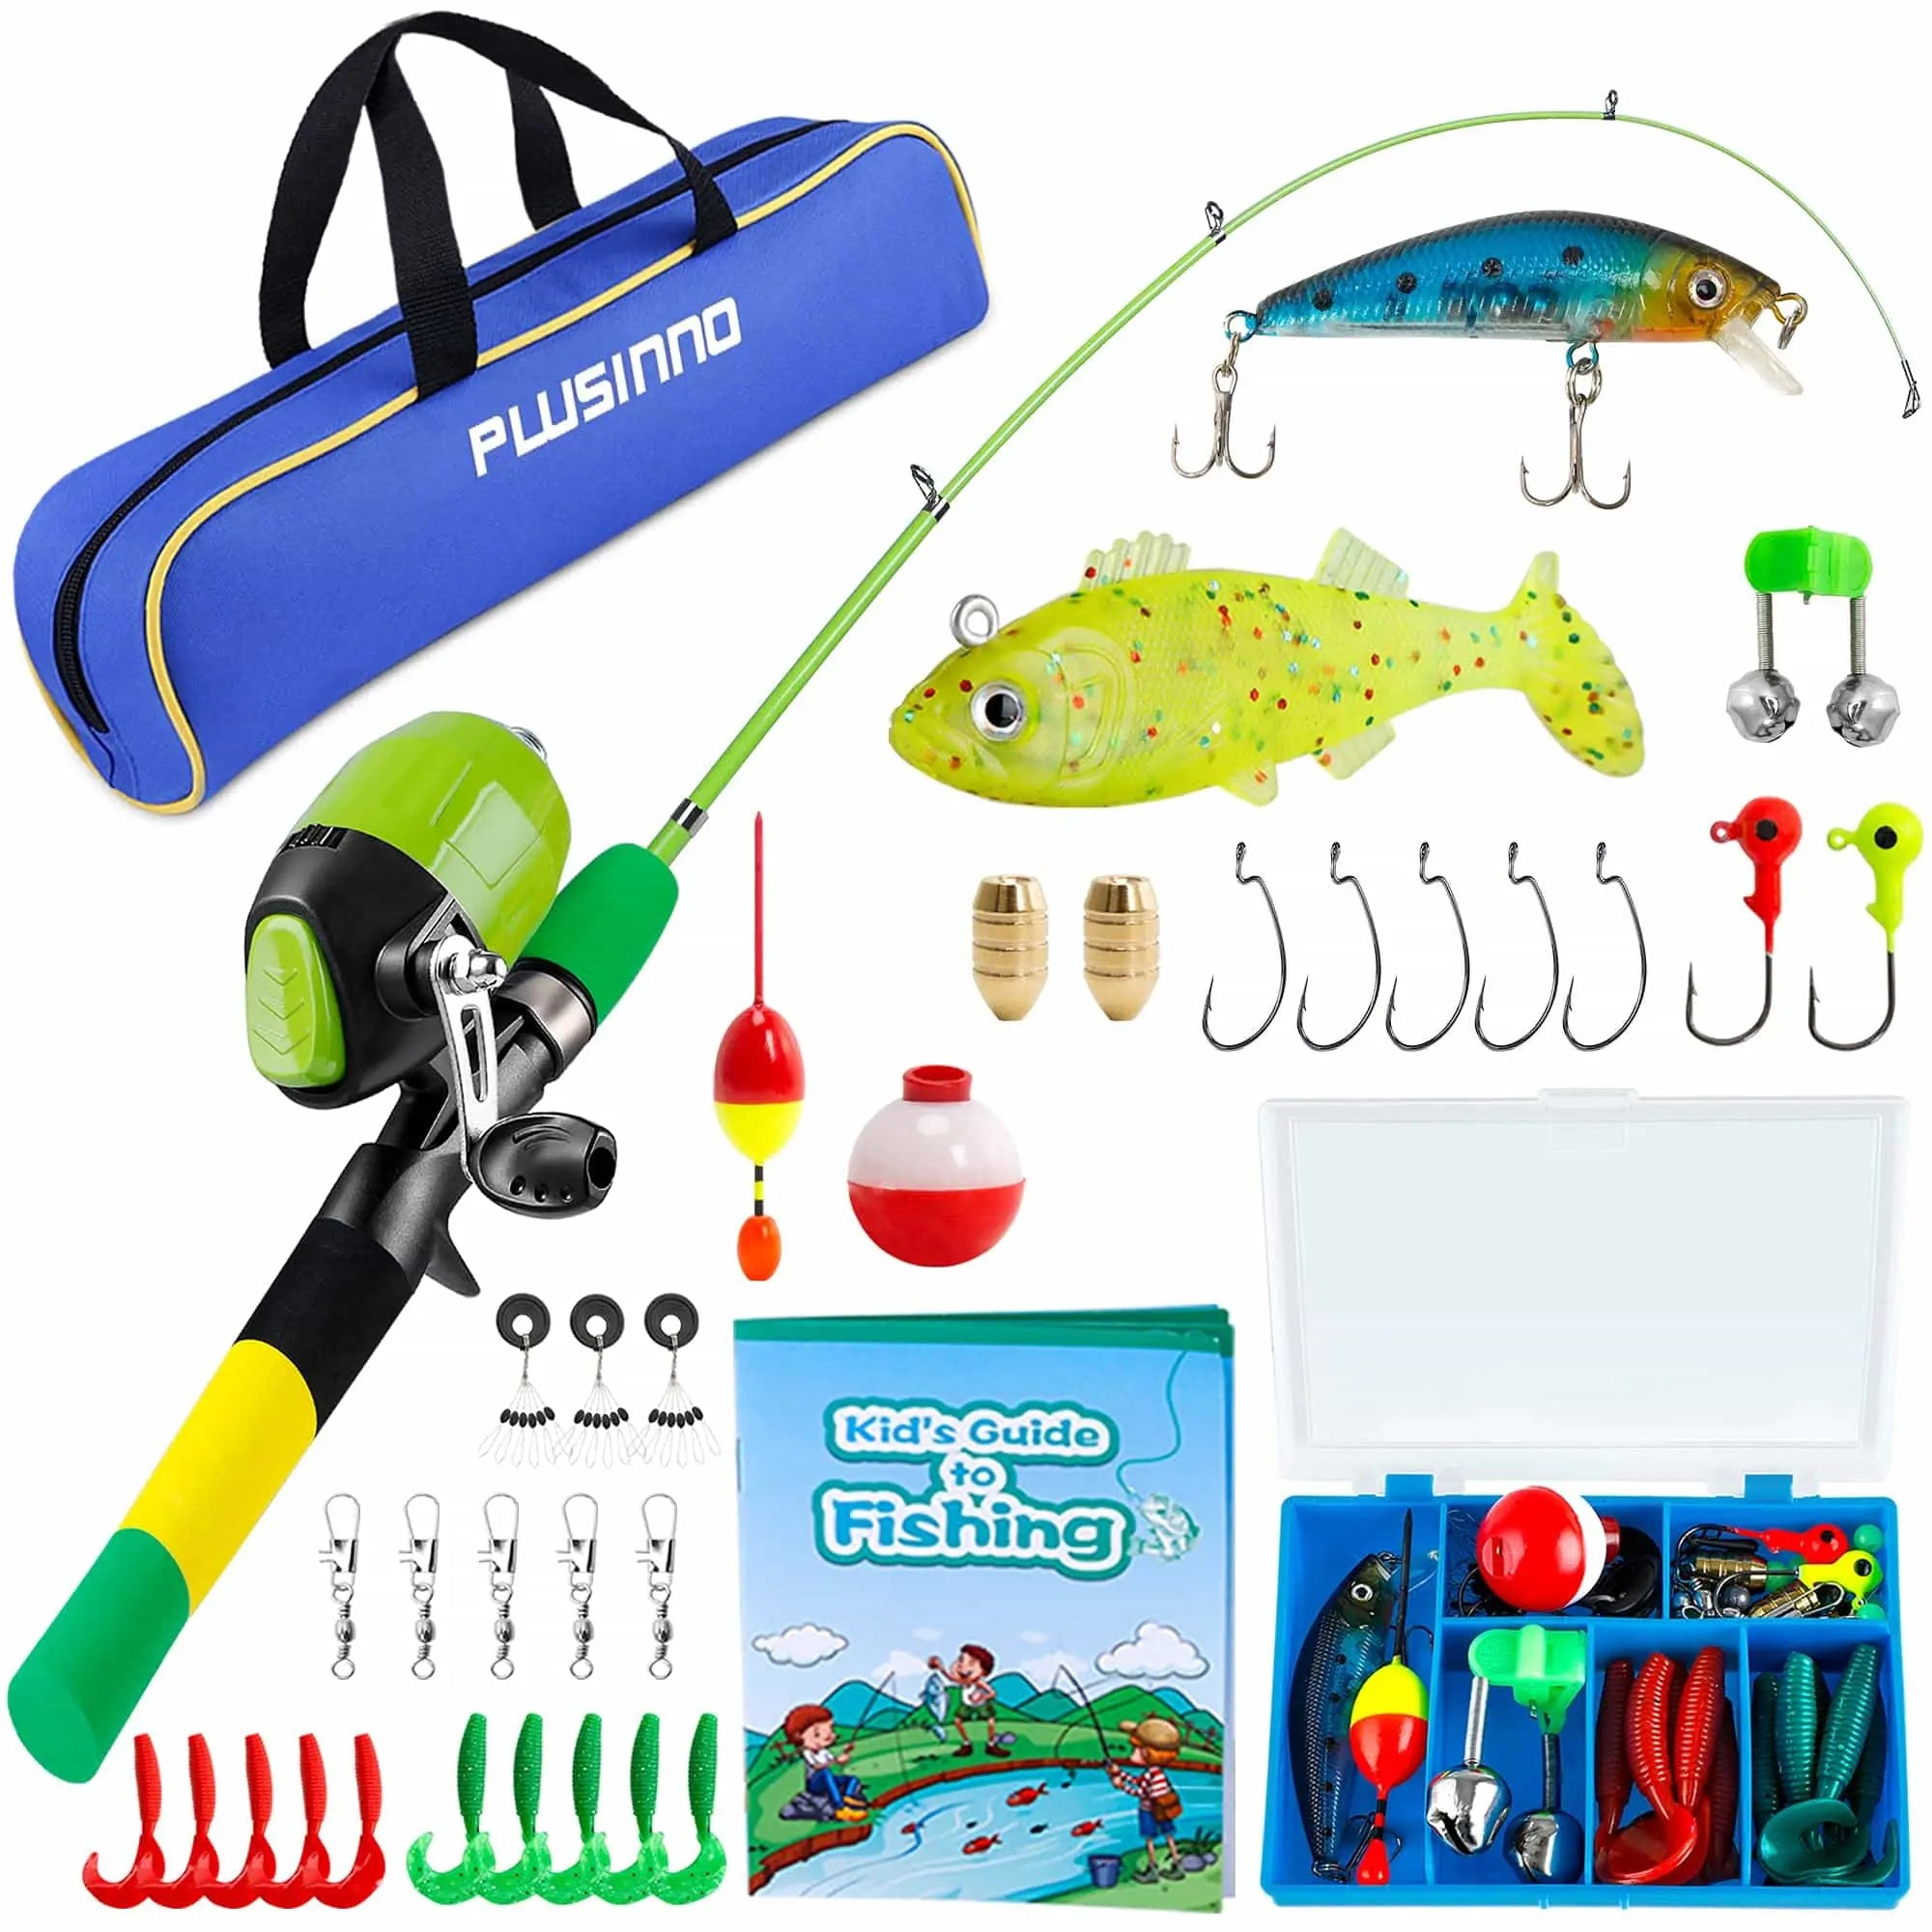 PLUSINNO Rainbow Kids Combos de pesca y carrete Kit completo sin red